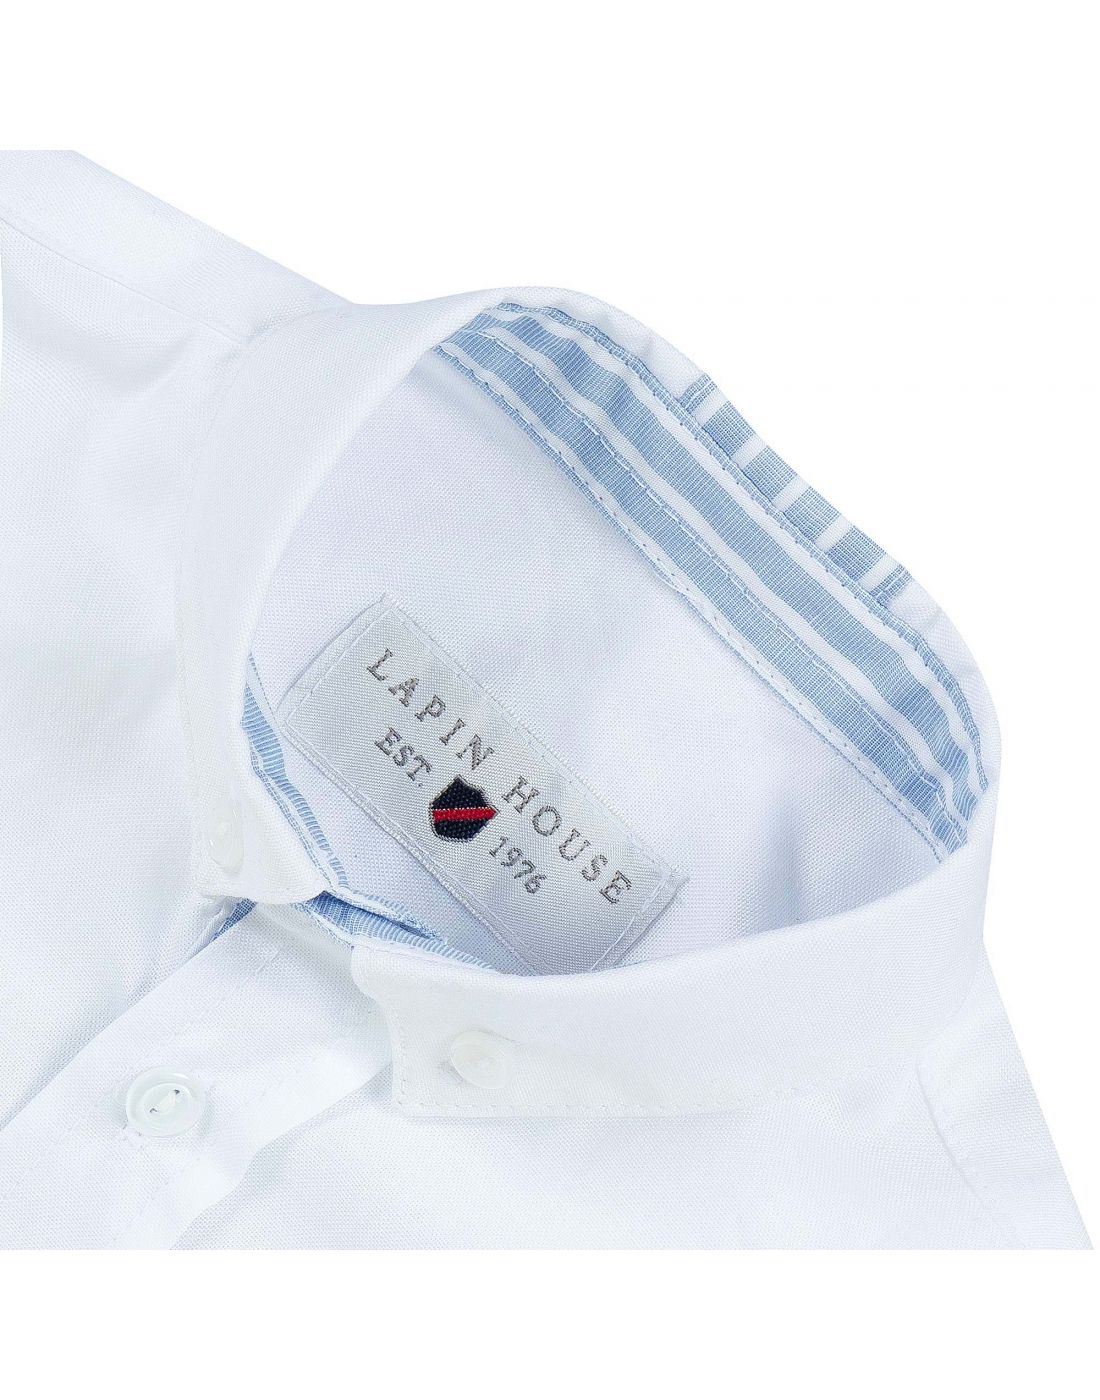 Lapin House Shirt-Trouser Baby Set